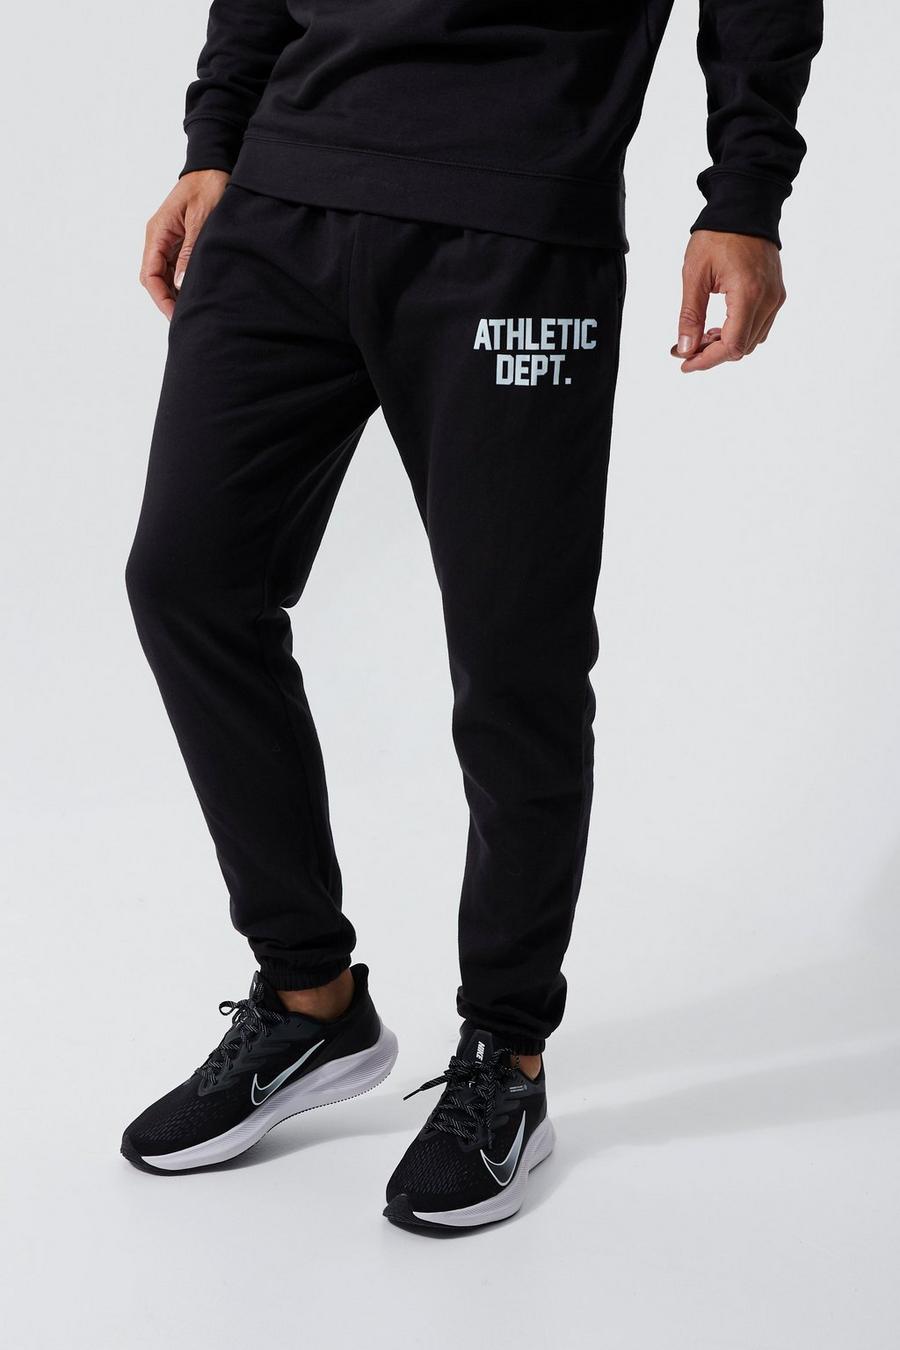 Pantalón deportivo Tall MAN Active con estampado Athletic Dept., Black negro